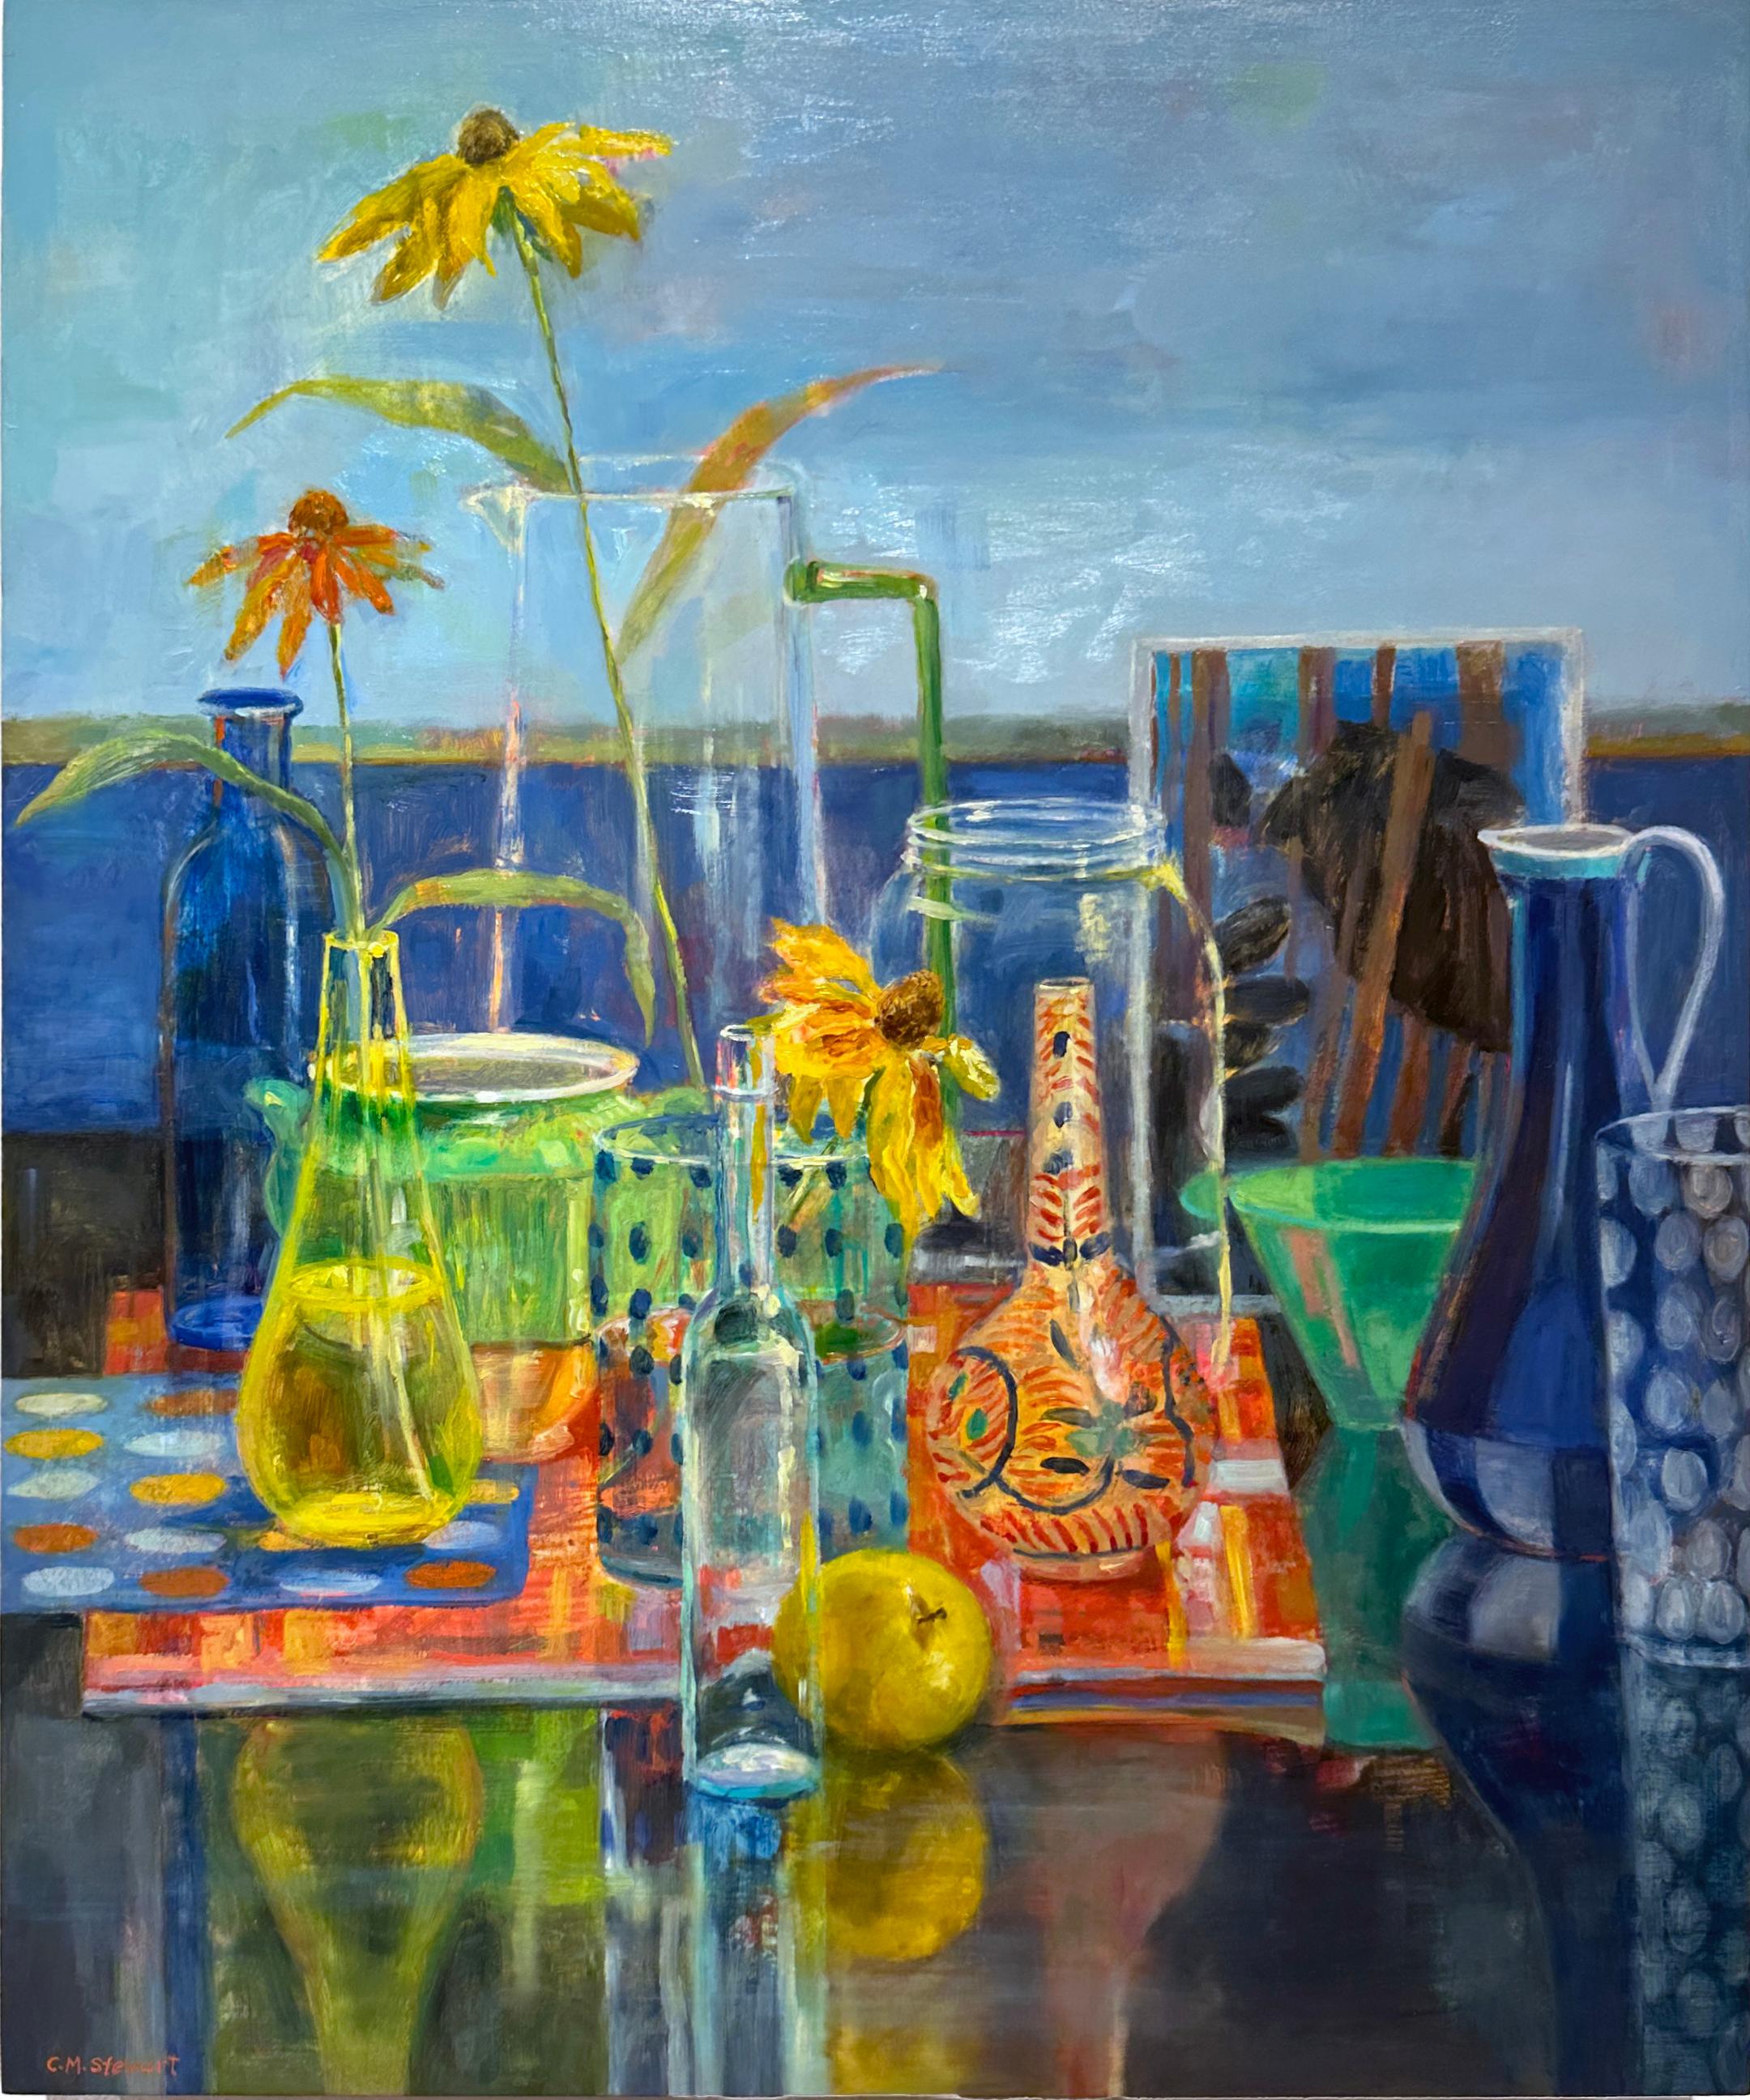 Carol Stewart Still-Life Painting - Ontario Summer Painting - Colorful Impressionist Still Life, Oil Painting